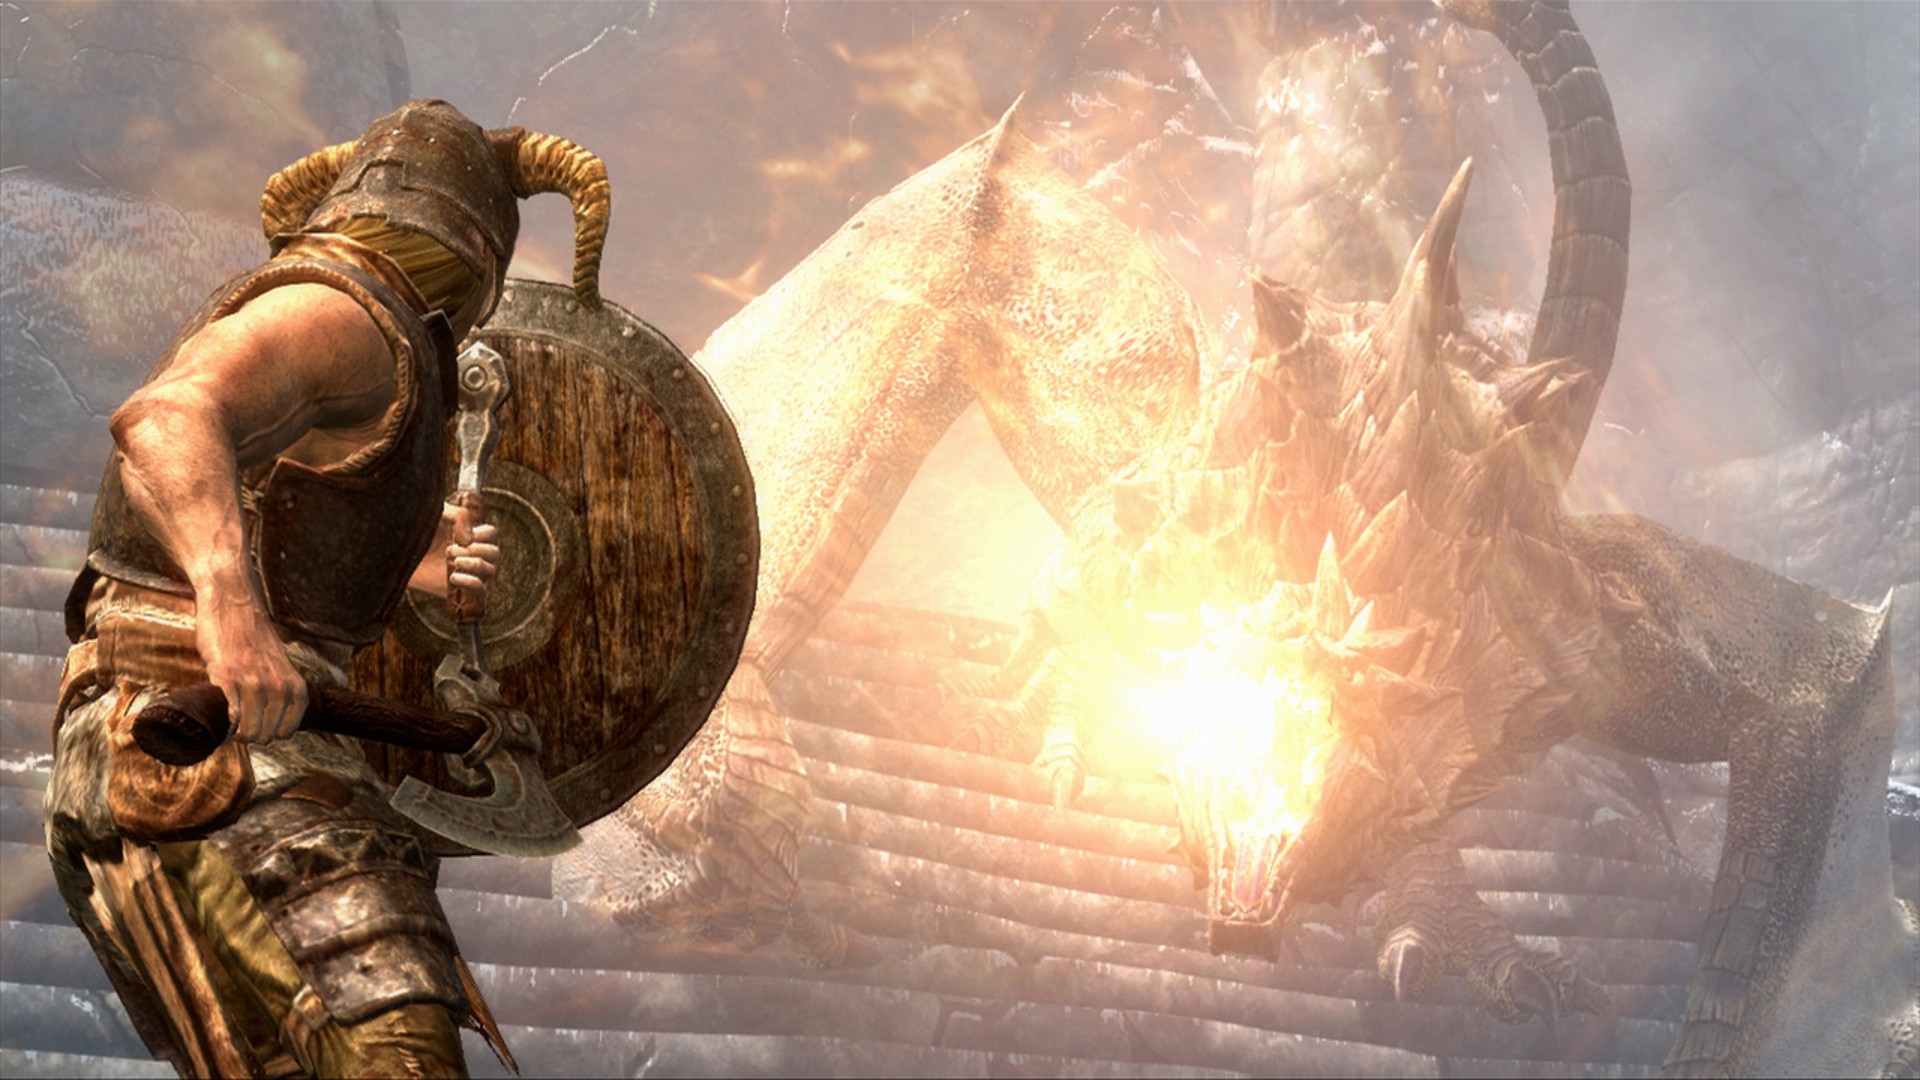 A shield against a fire-breathing dragon in Skyrim